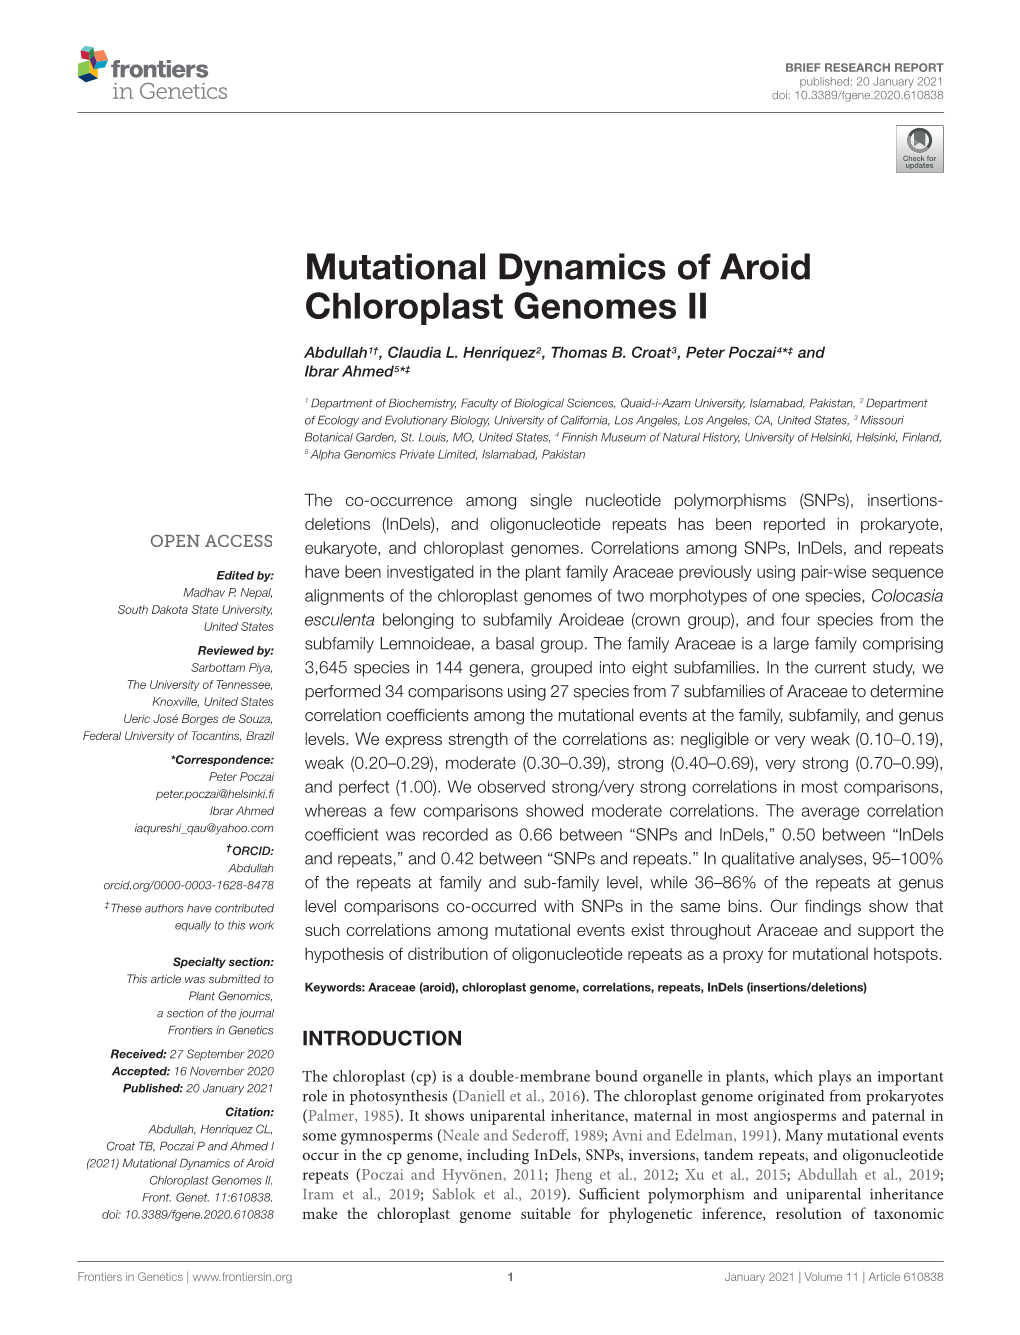 Mutational Dynamics of Aroid Chloroplast Genomes II